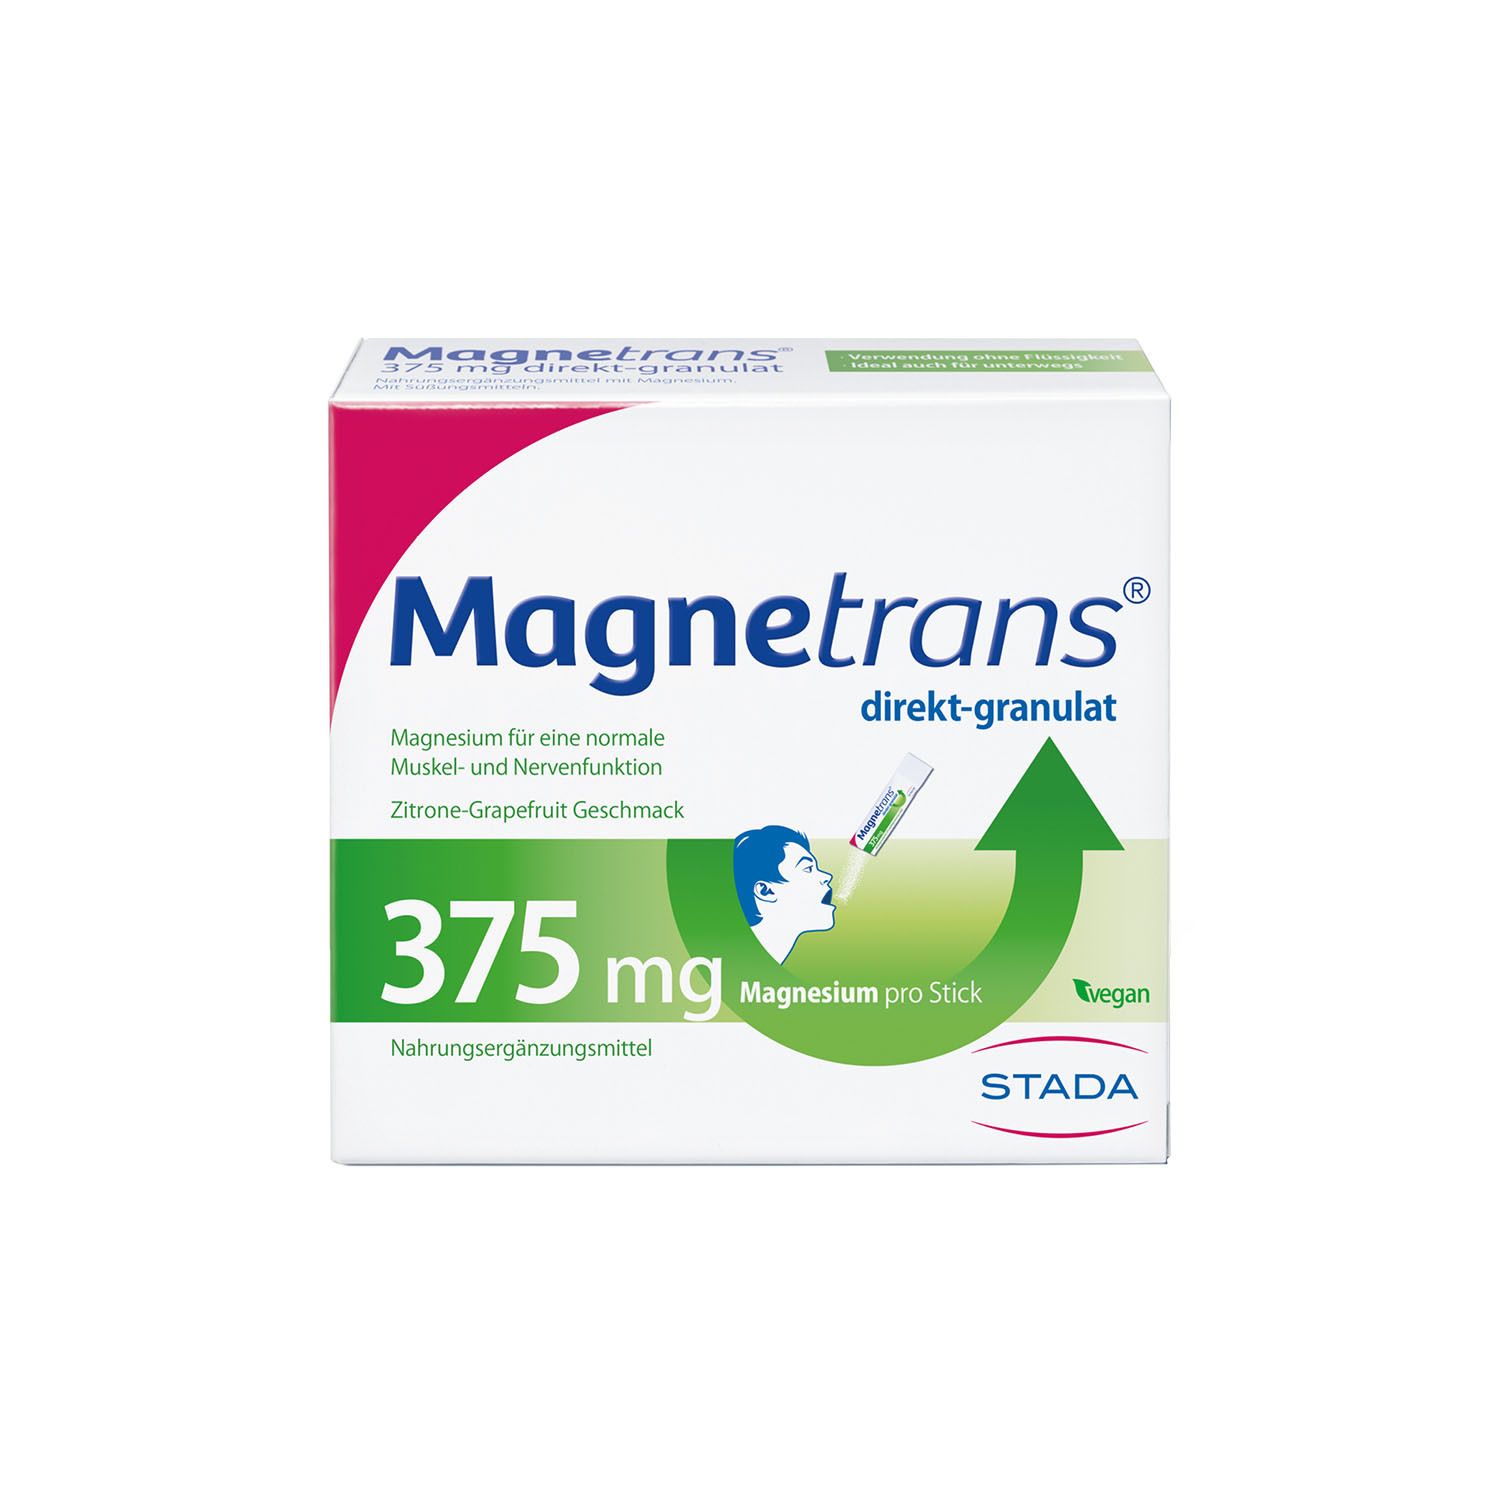 Image of Magnetrans® direkt-granulat 375 mg